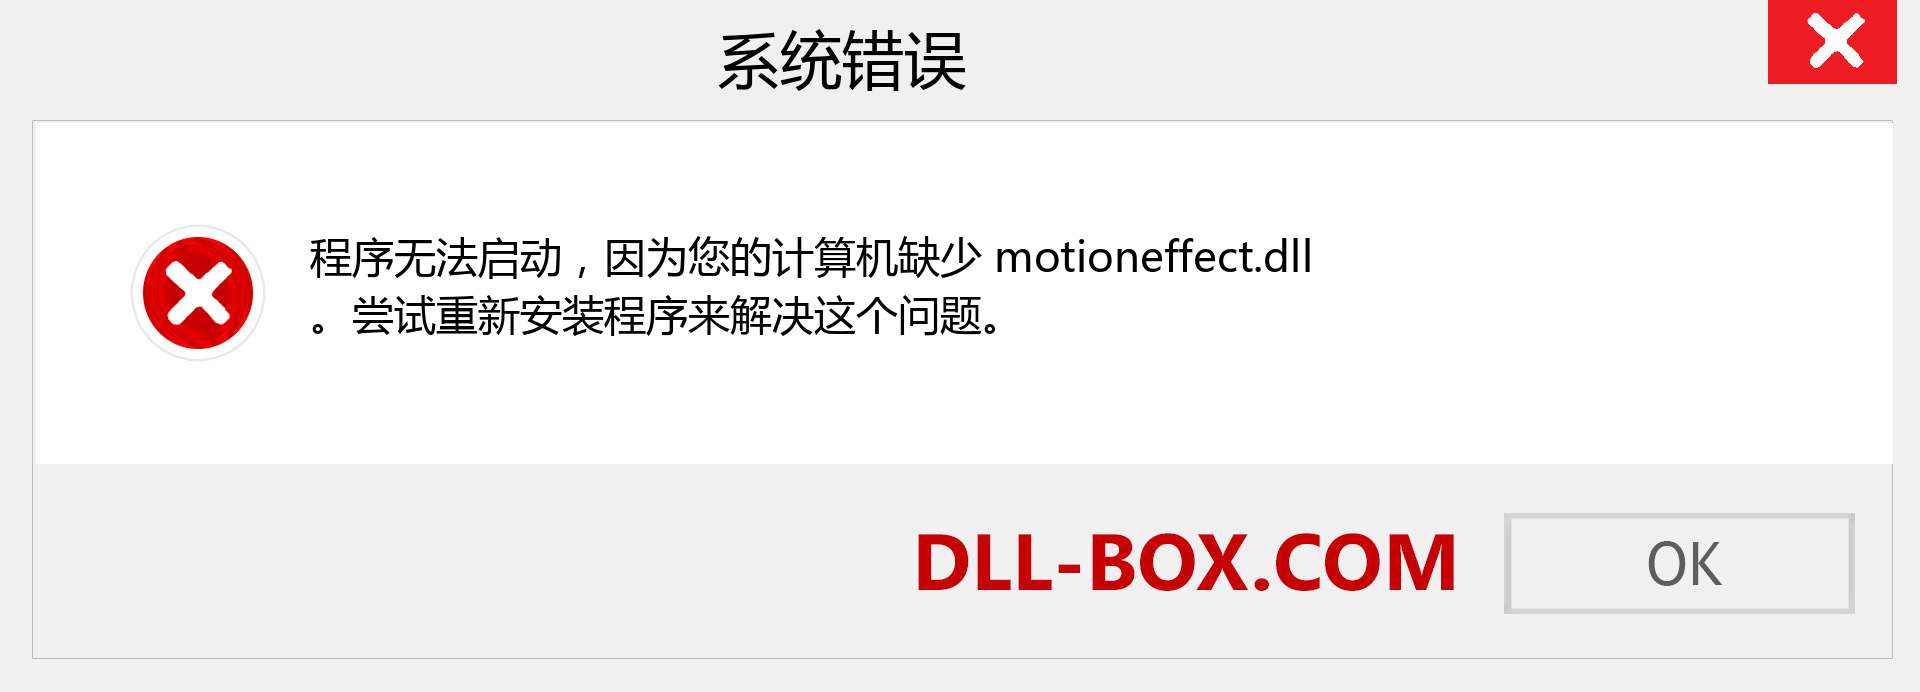 motioneffect.dll 文件丢失？。 适用于 Windows 7、8、10 的下载 - 修复 Windows、照片、图像上的 motioneffect dll 丢失错误